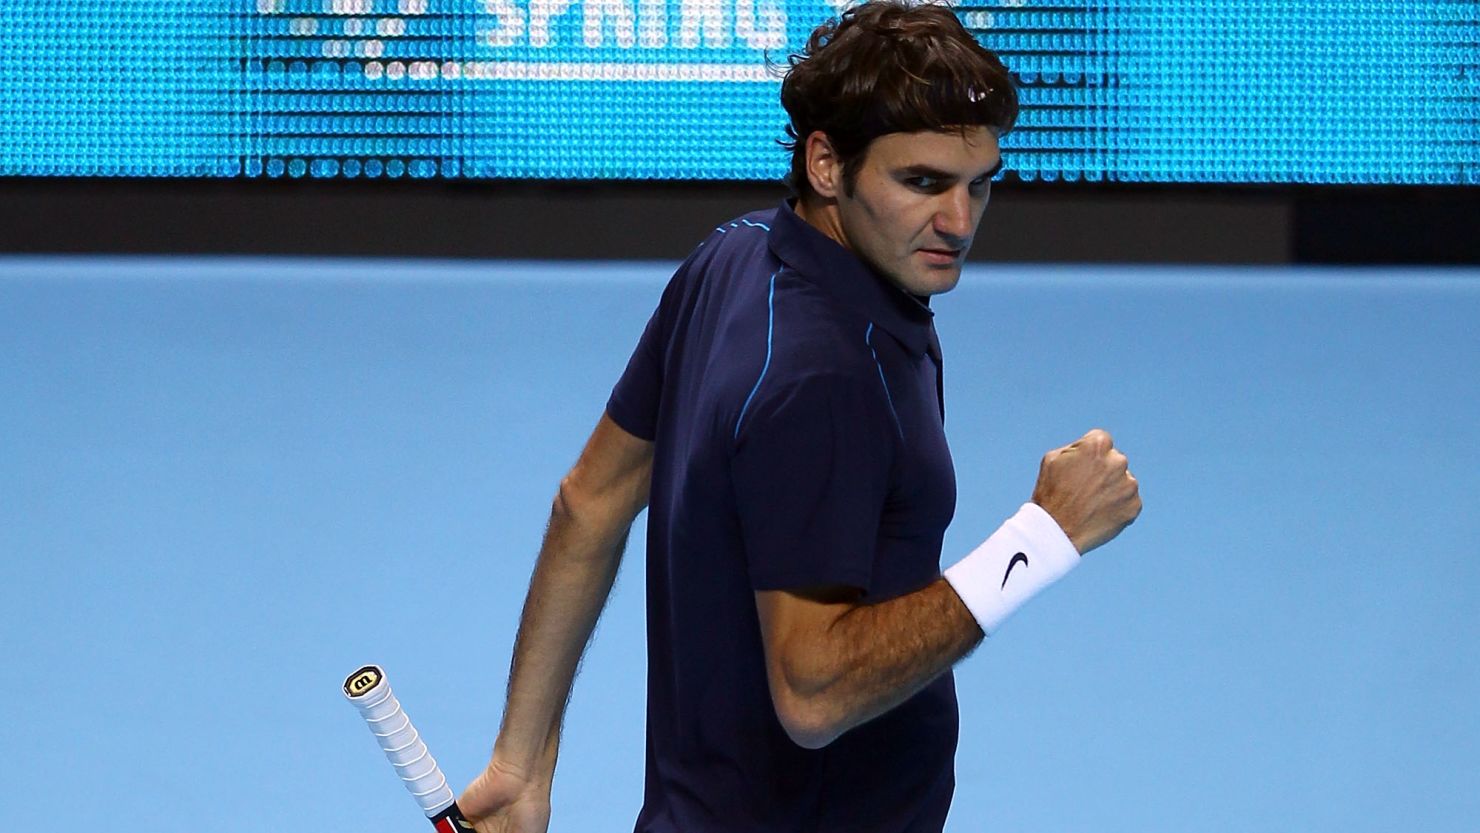 A determined Roger Federer swept aside Rafael Nadal in the ATP World Tour Finals 